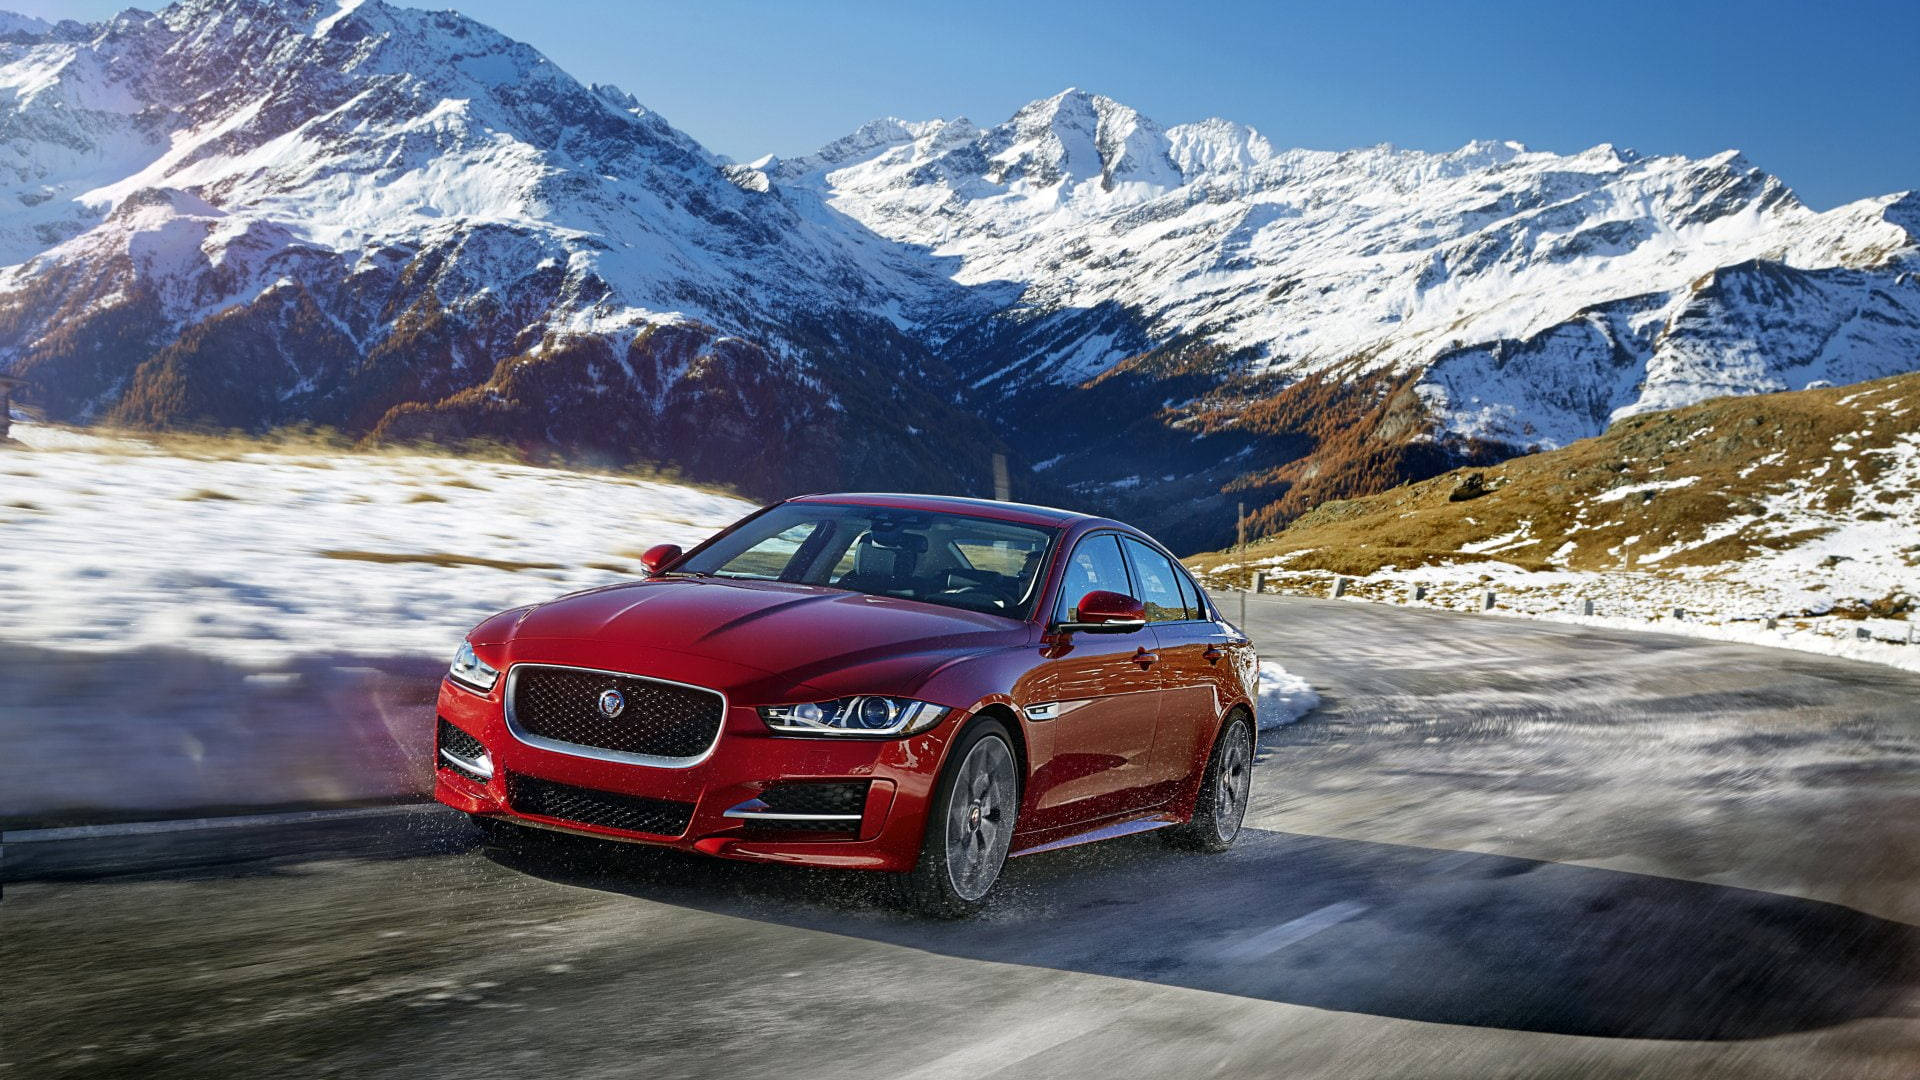 “a Red Jaguar Car Speeding Through A Mountain Range.”